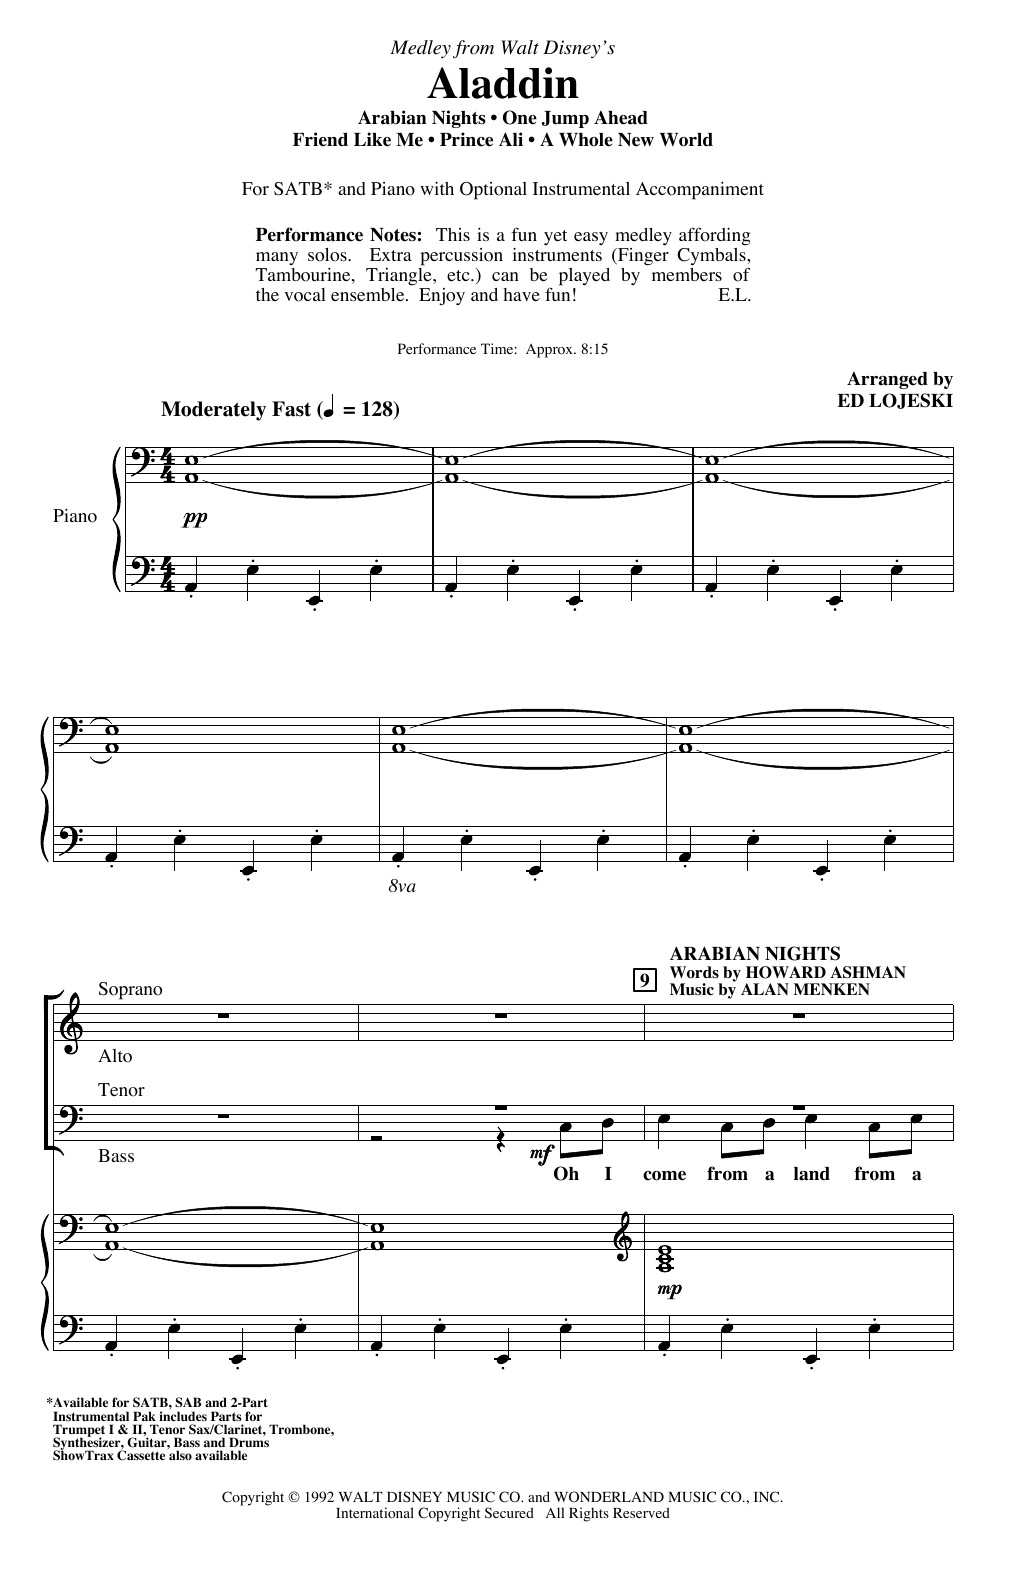 Alan Menken Aladdin (Medley) (from Disney's Aladdin) (arr. Ed Lojeski) Sheet Music Notes & Chords for SATB Choir - Download or Print PDF